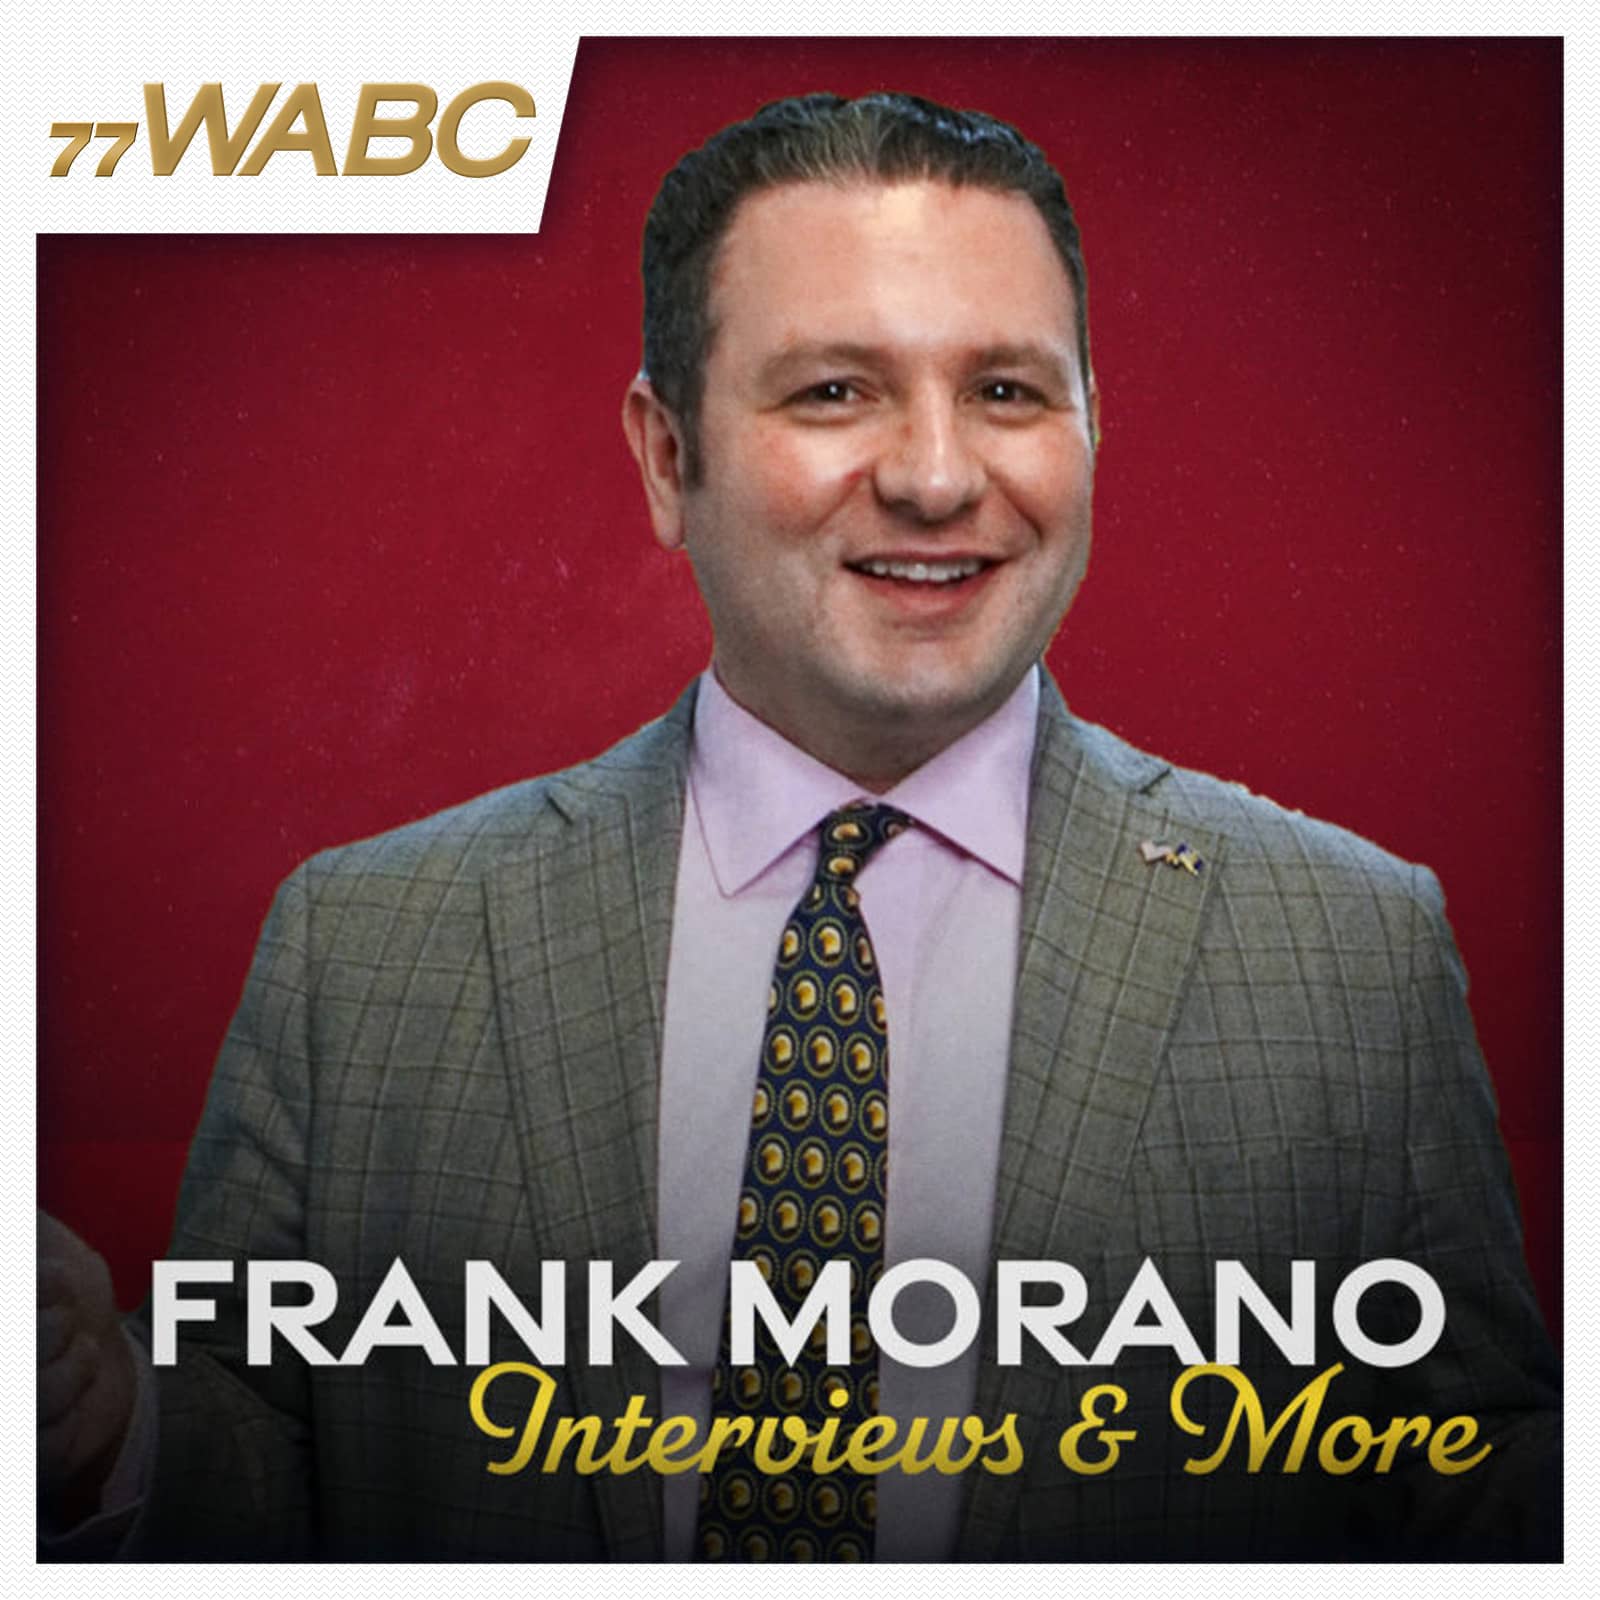 frank-morano-interviews-and-more-podcast-new-logo847704